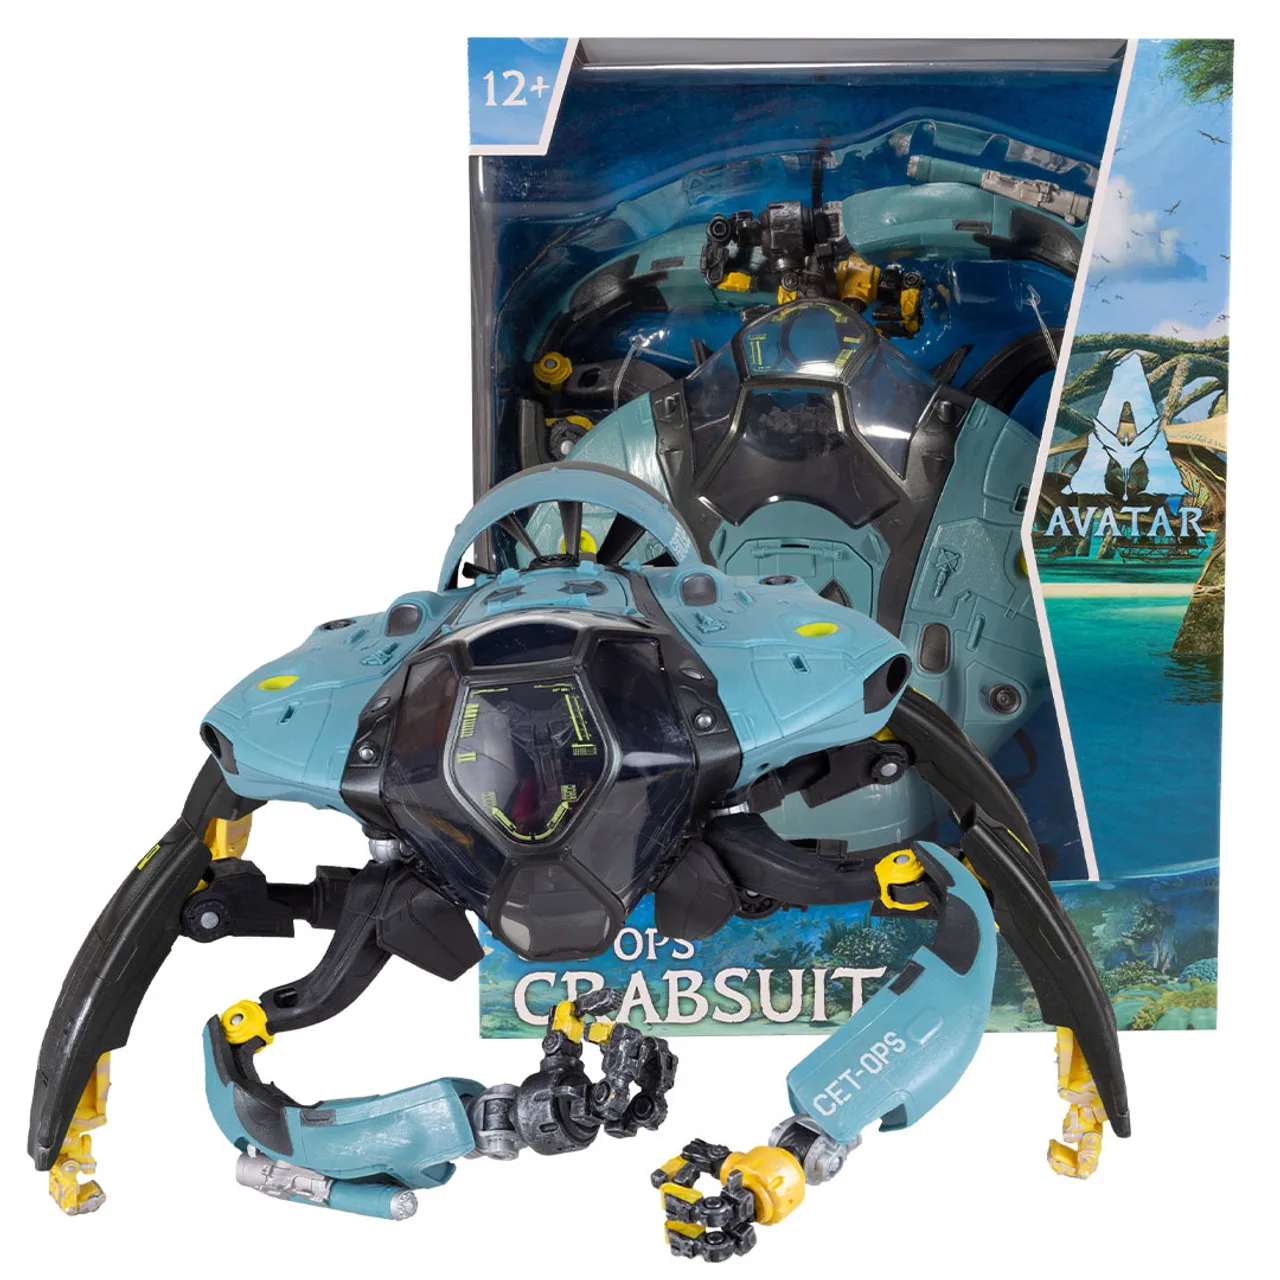 Mcfarlane crab suit avatar the way of water mega figure toys 25cm thumb200